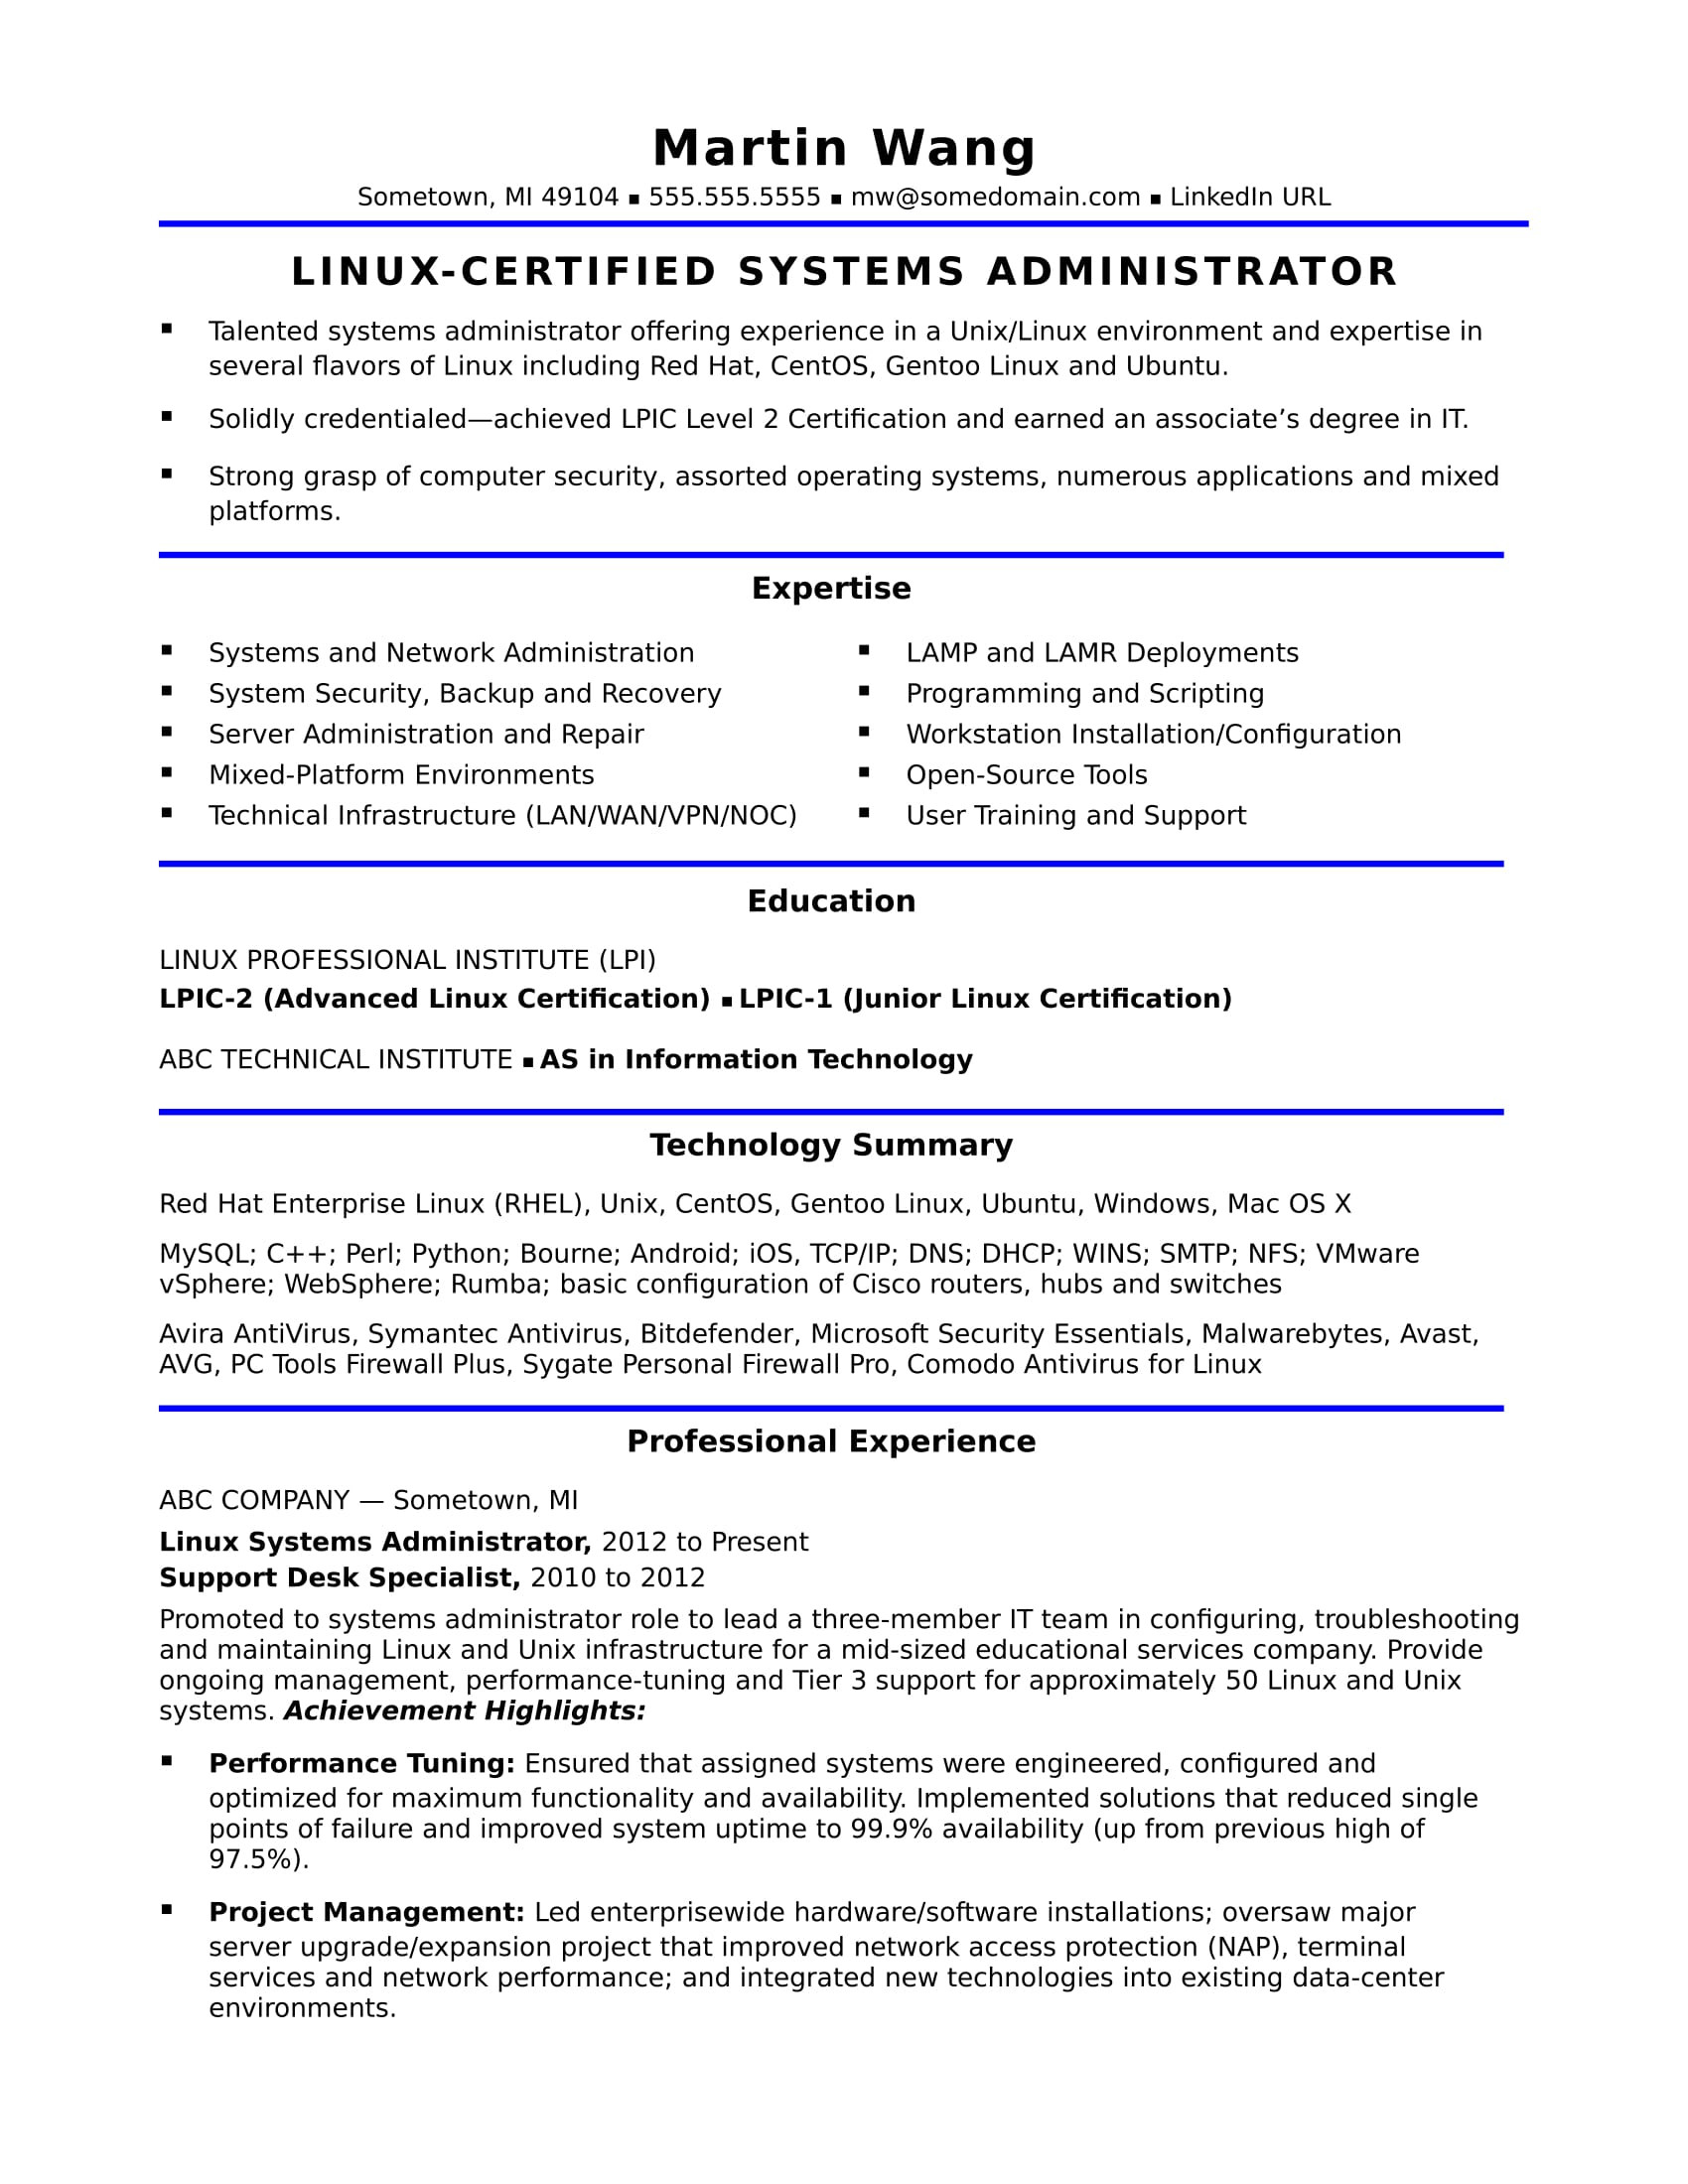 Windows System Administrator Sample Resume Free Download Sample Resume for A Midlevel Systems Administrator Monster.com